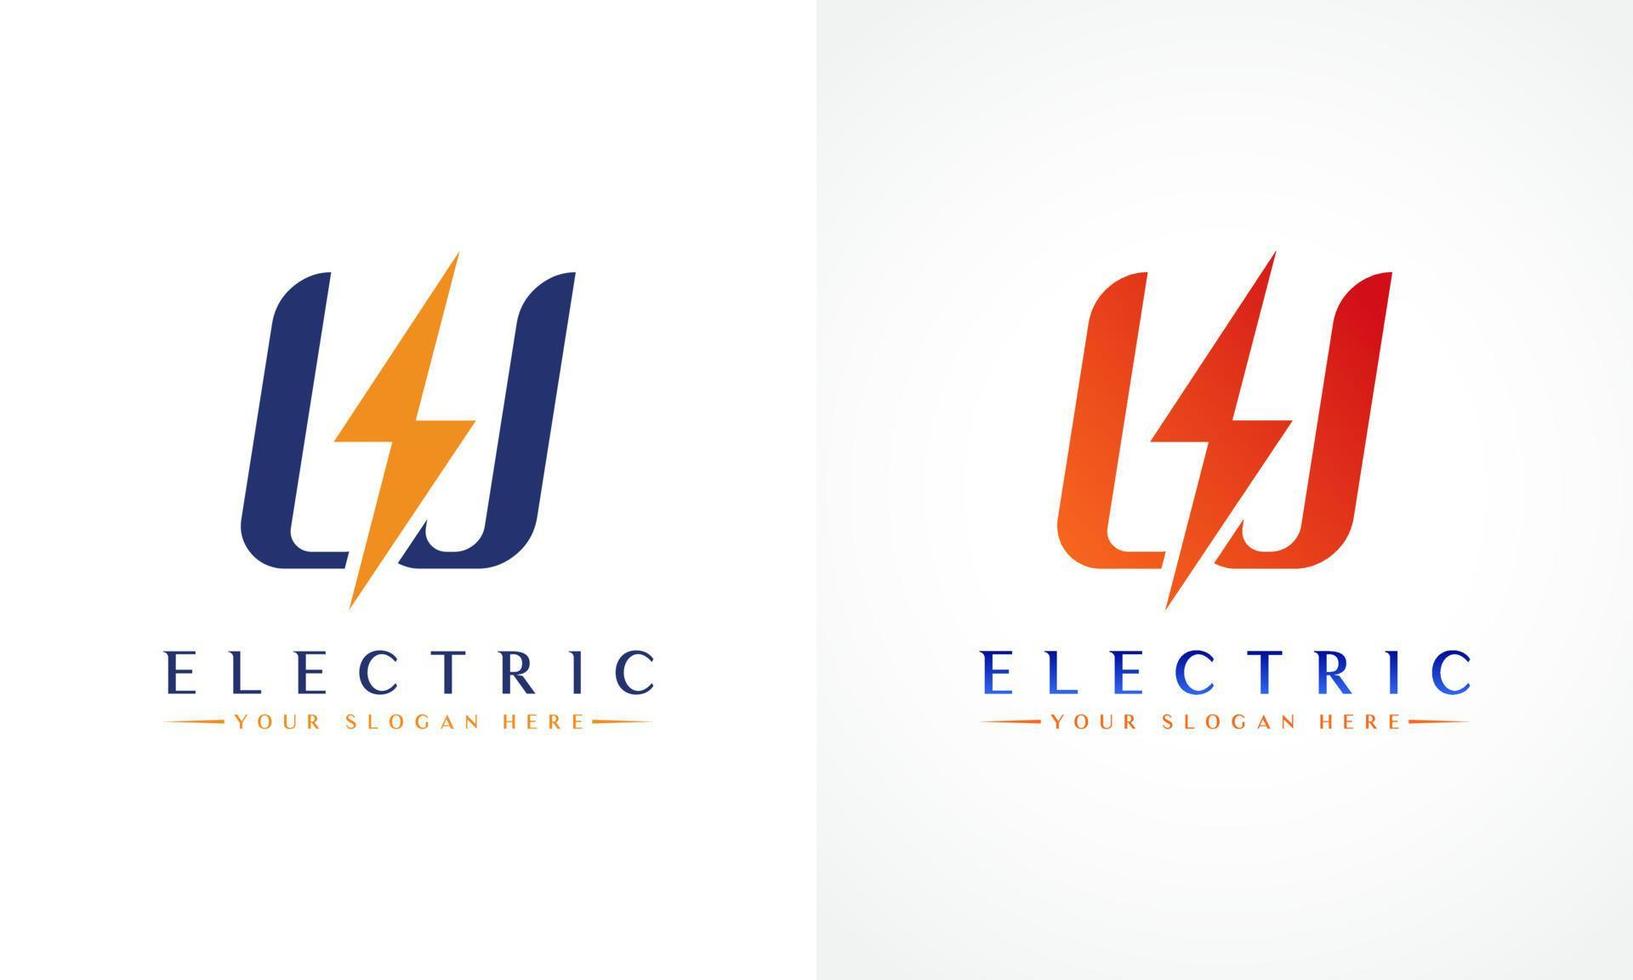 W Letter Logo With Lightning Thunder Bolt Vector Design. Electric Bolt Letter W Logo Vector Illustration.